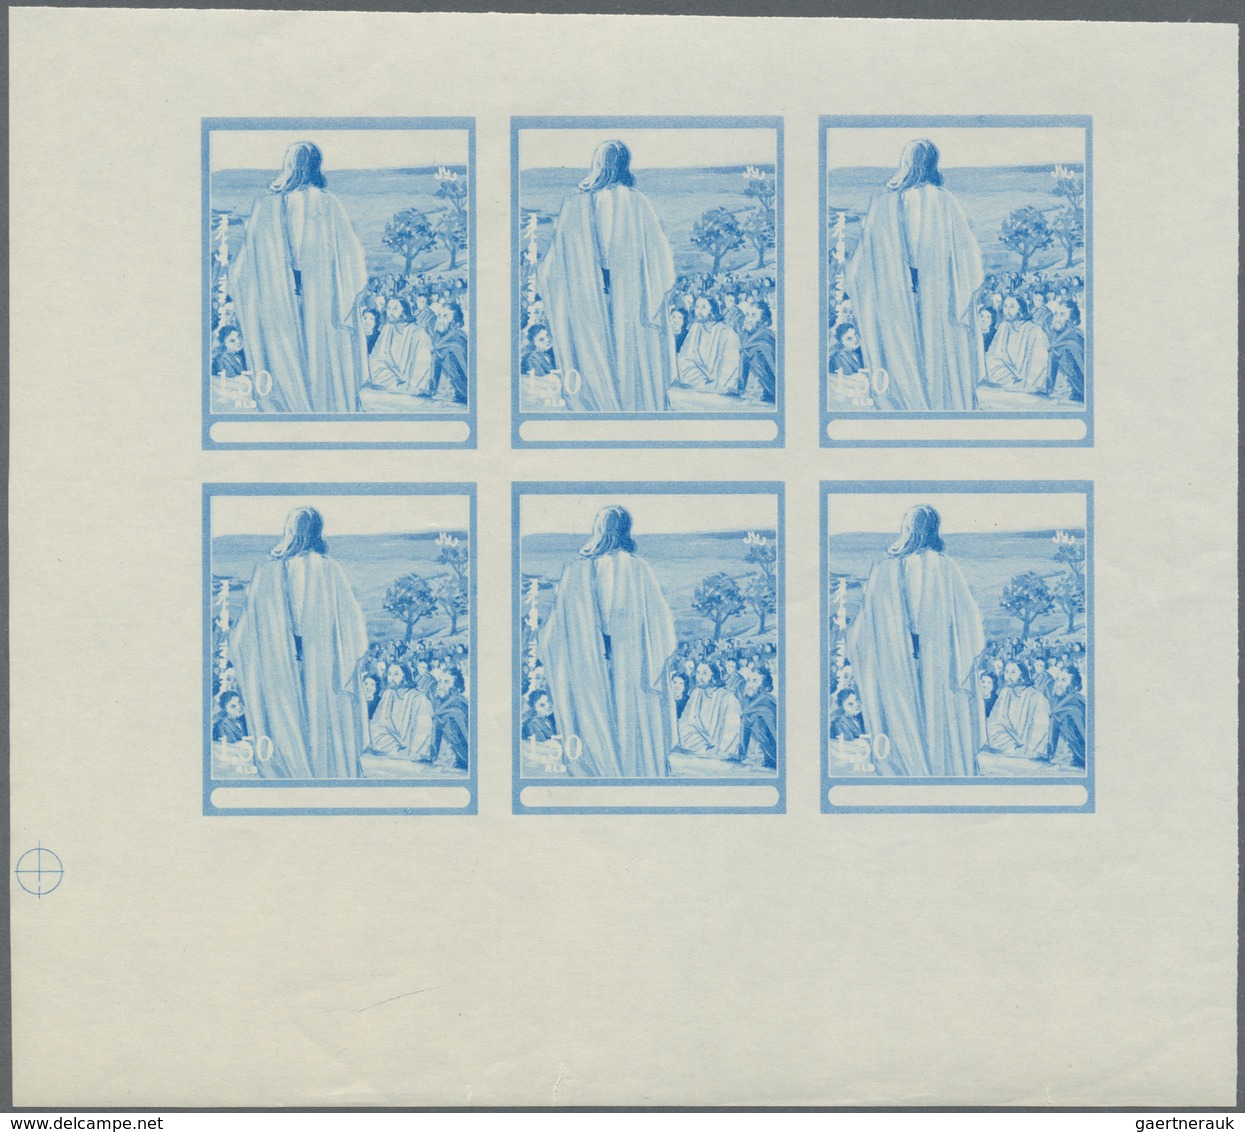 ** Thematik: Religion / religion: 1970, Fujeira. Progressive proof (7 phases) in miniature sheets of 6